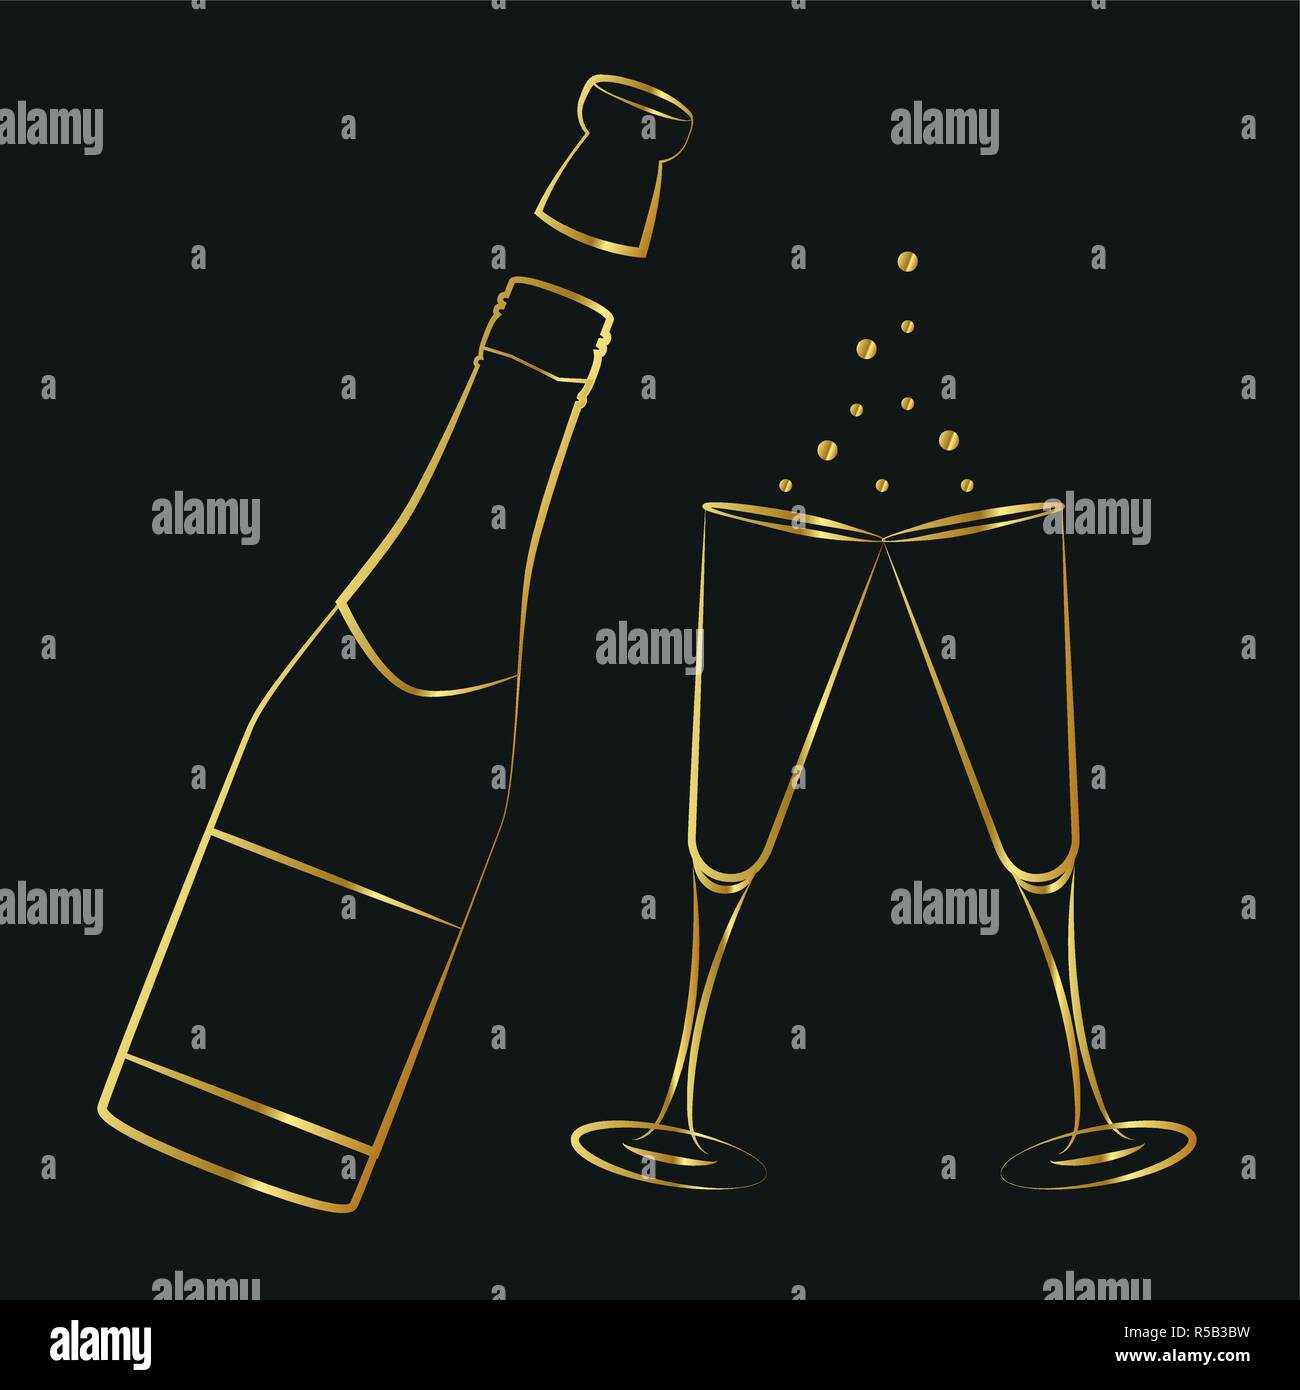 golden champagne bottle and glasses outline drawing vector illustration EPS10 Stock Vector